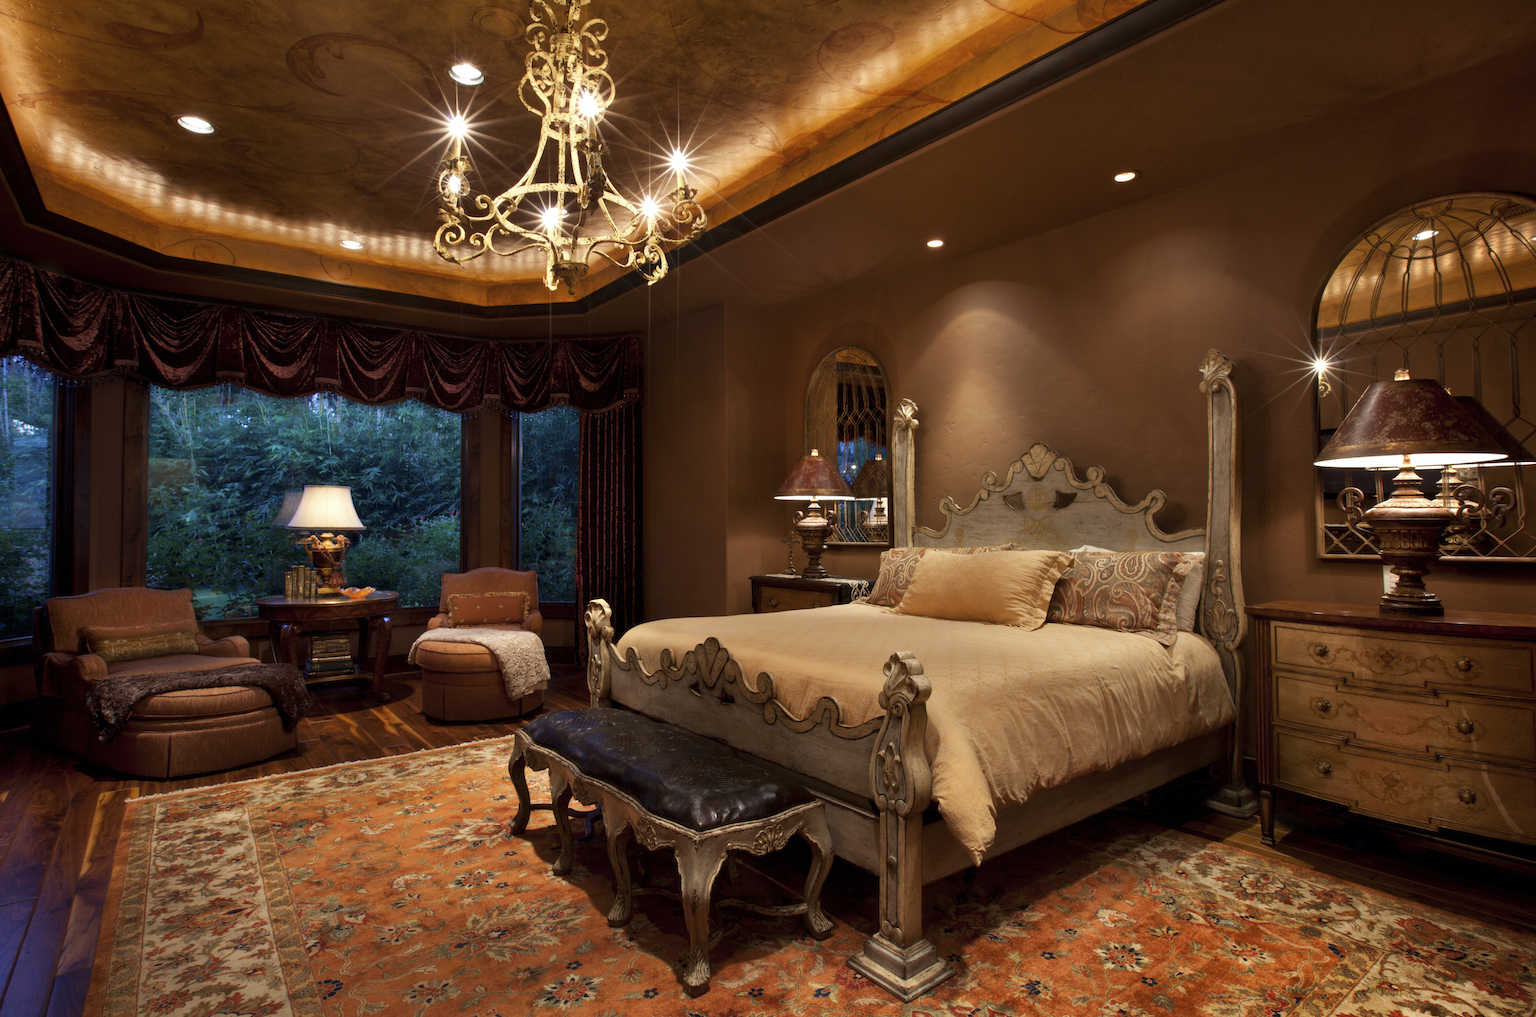 Romancing-master-bedroom-decorating-ideas